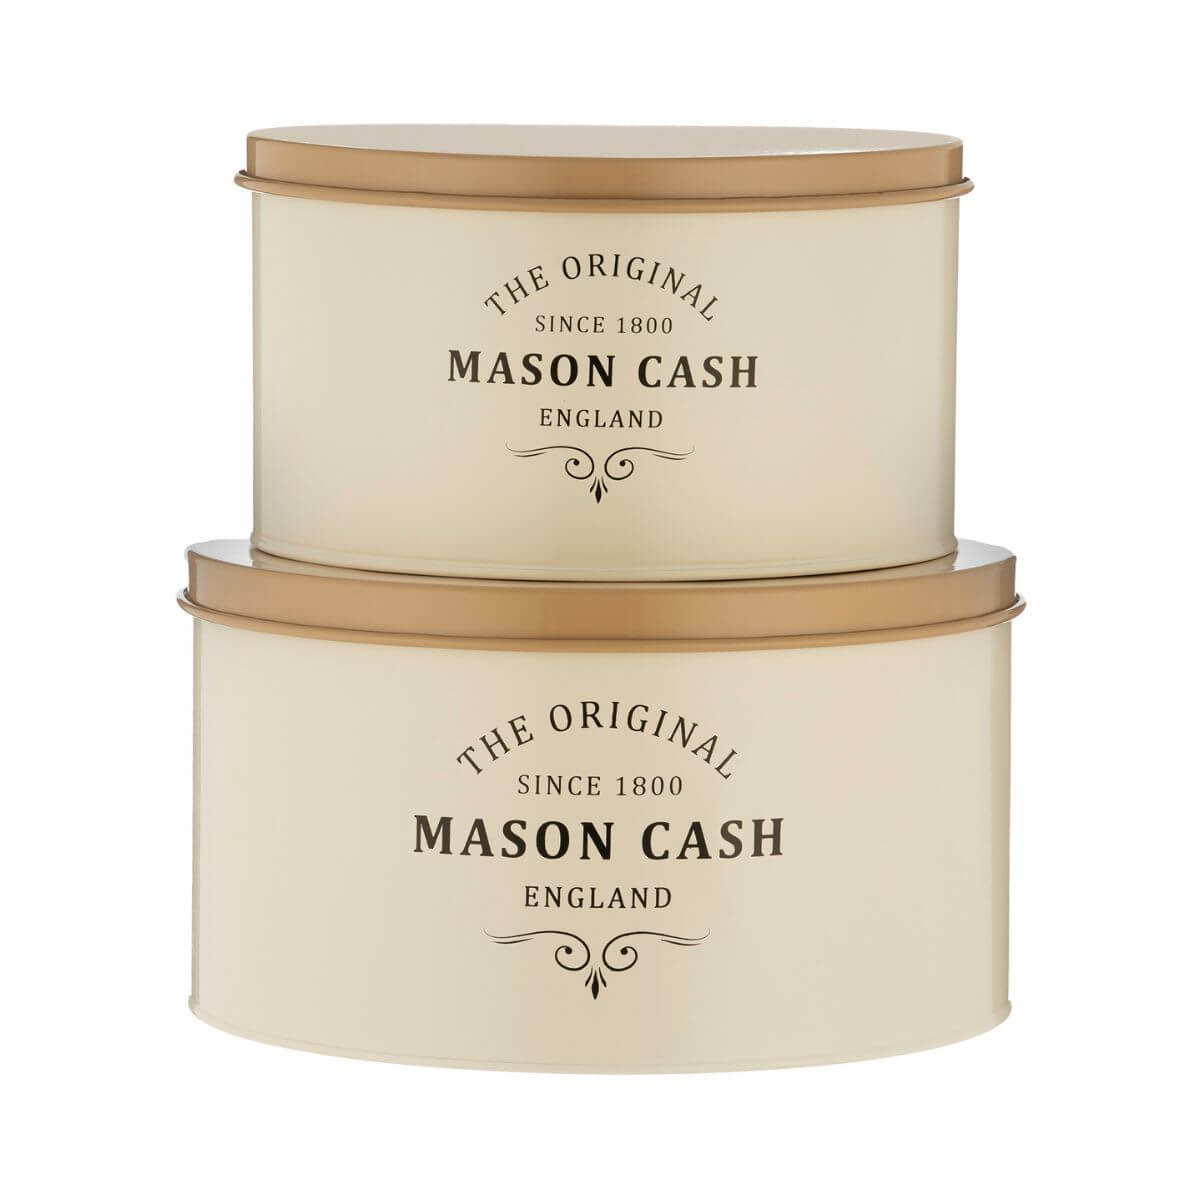 Mason Cash Heritage Collection Round Cake Tins 2pce Set